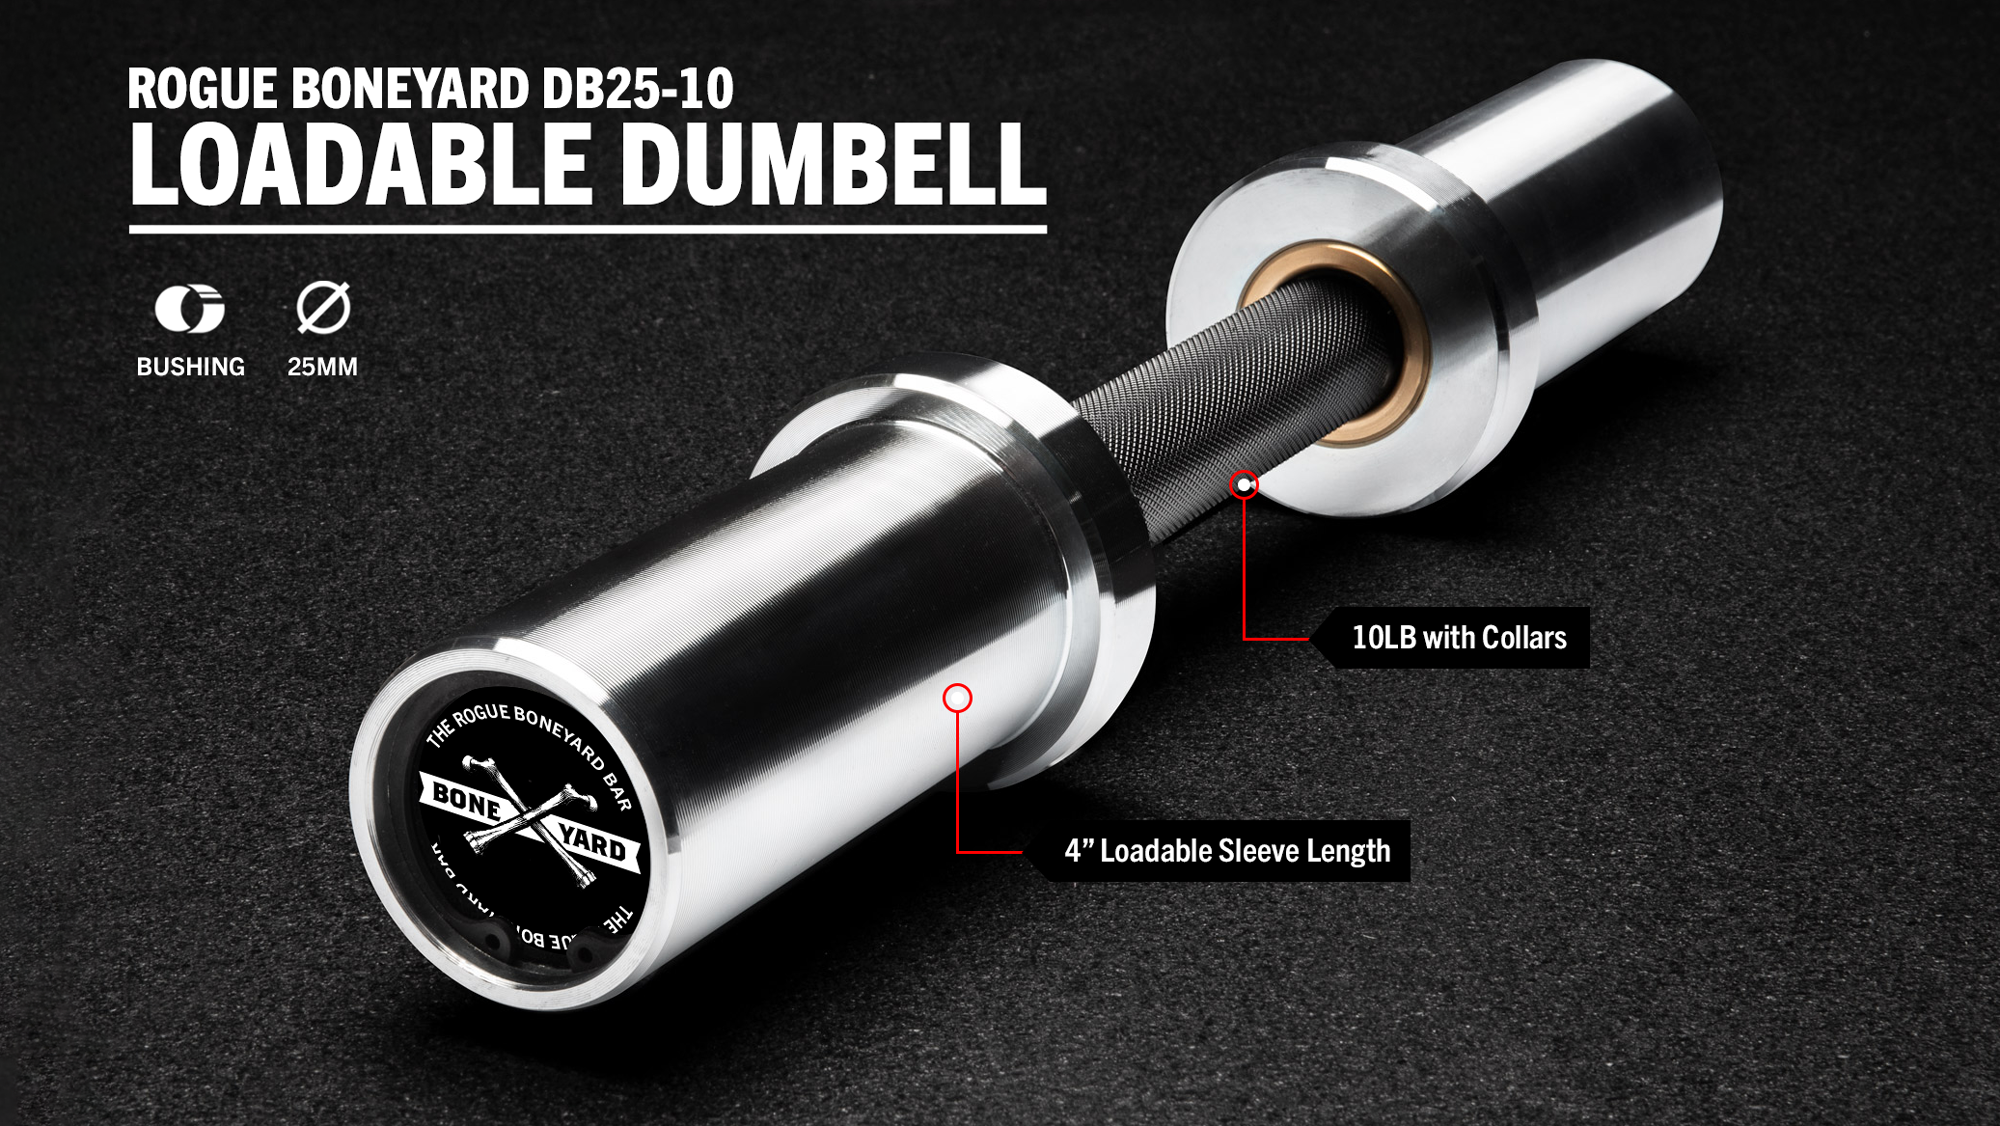 Rogue Boneyard DB25-10 Loadable Dumbbell